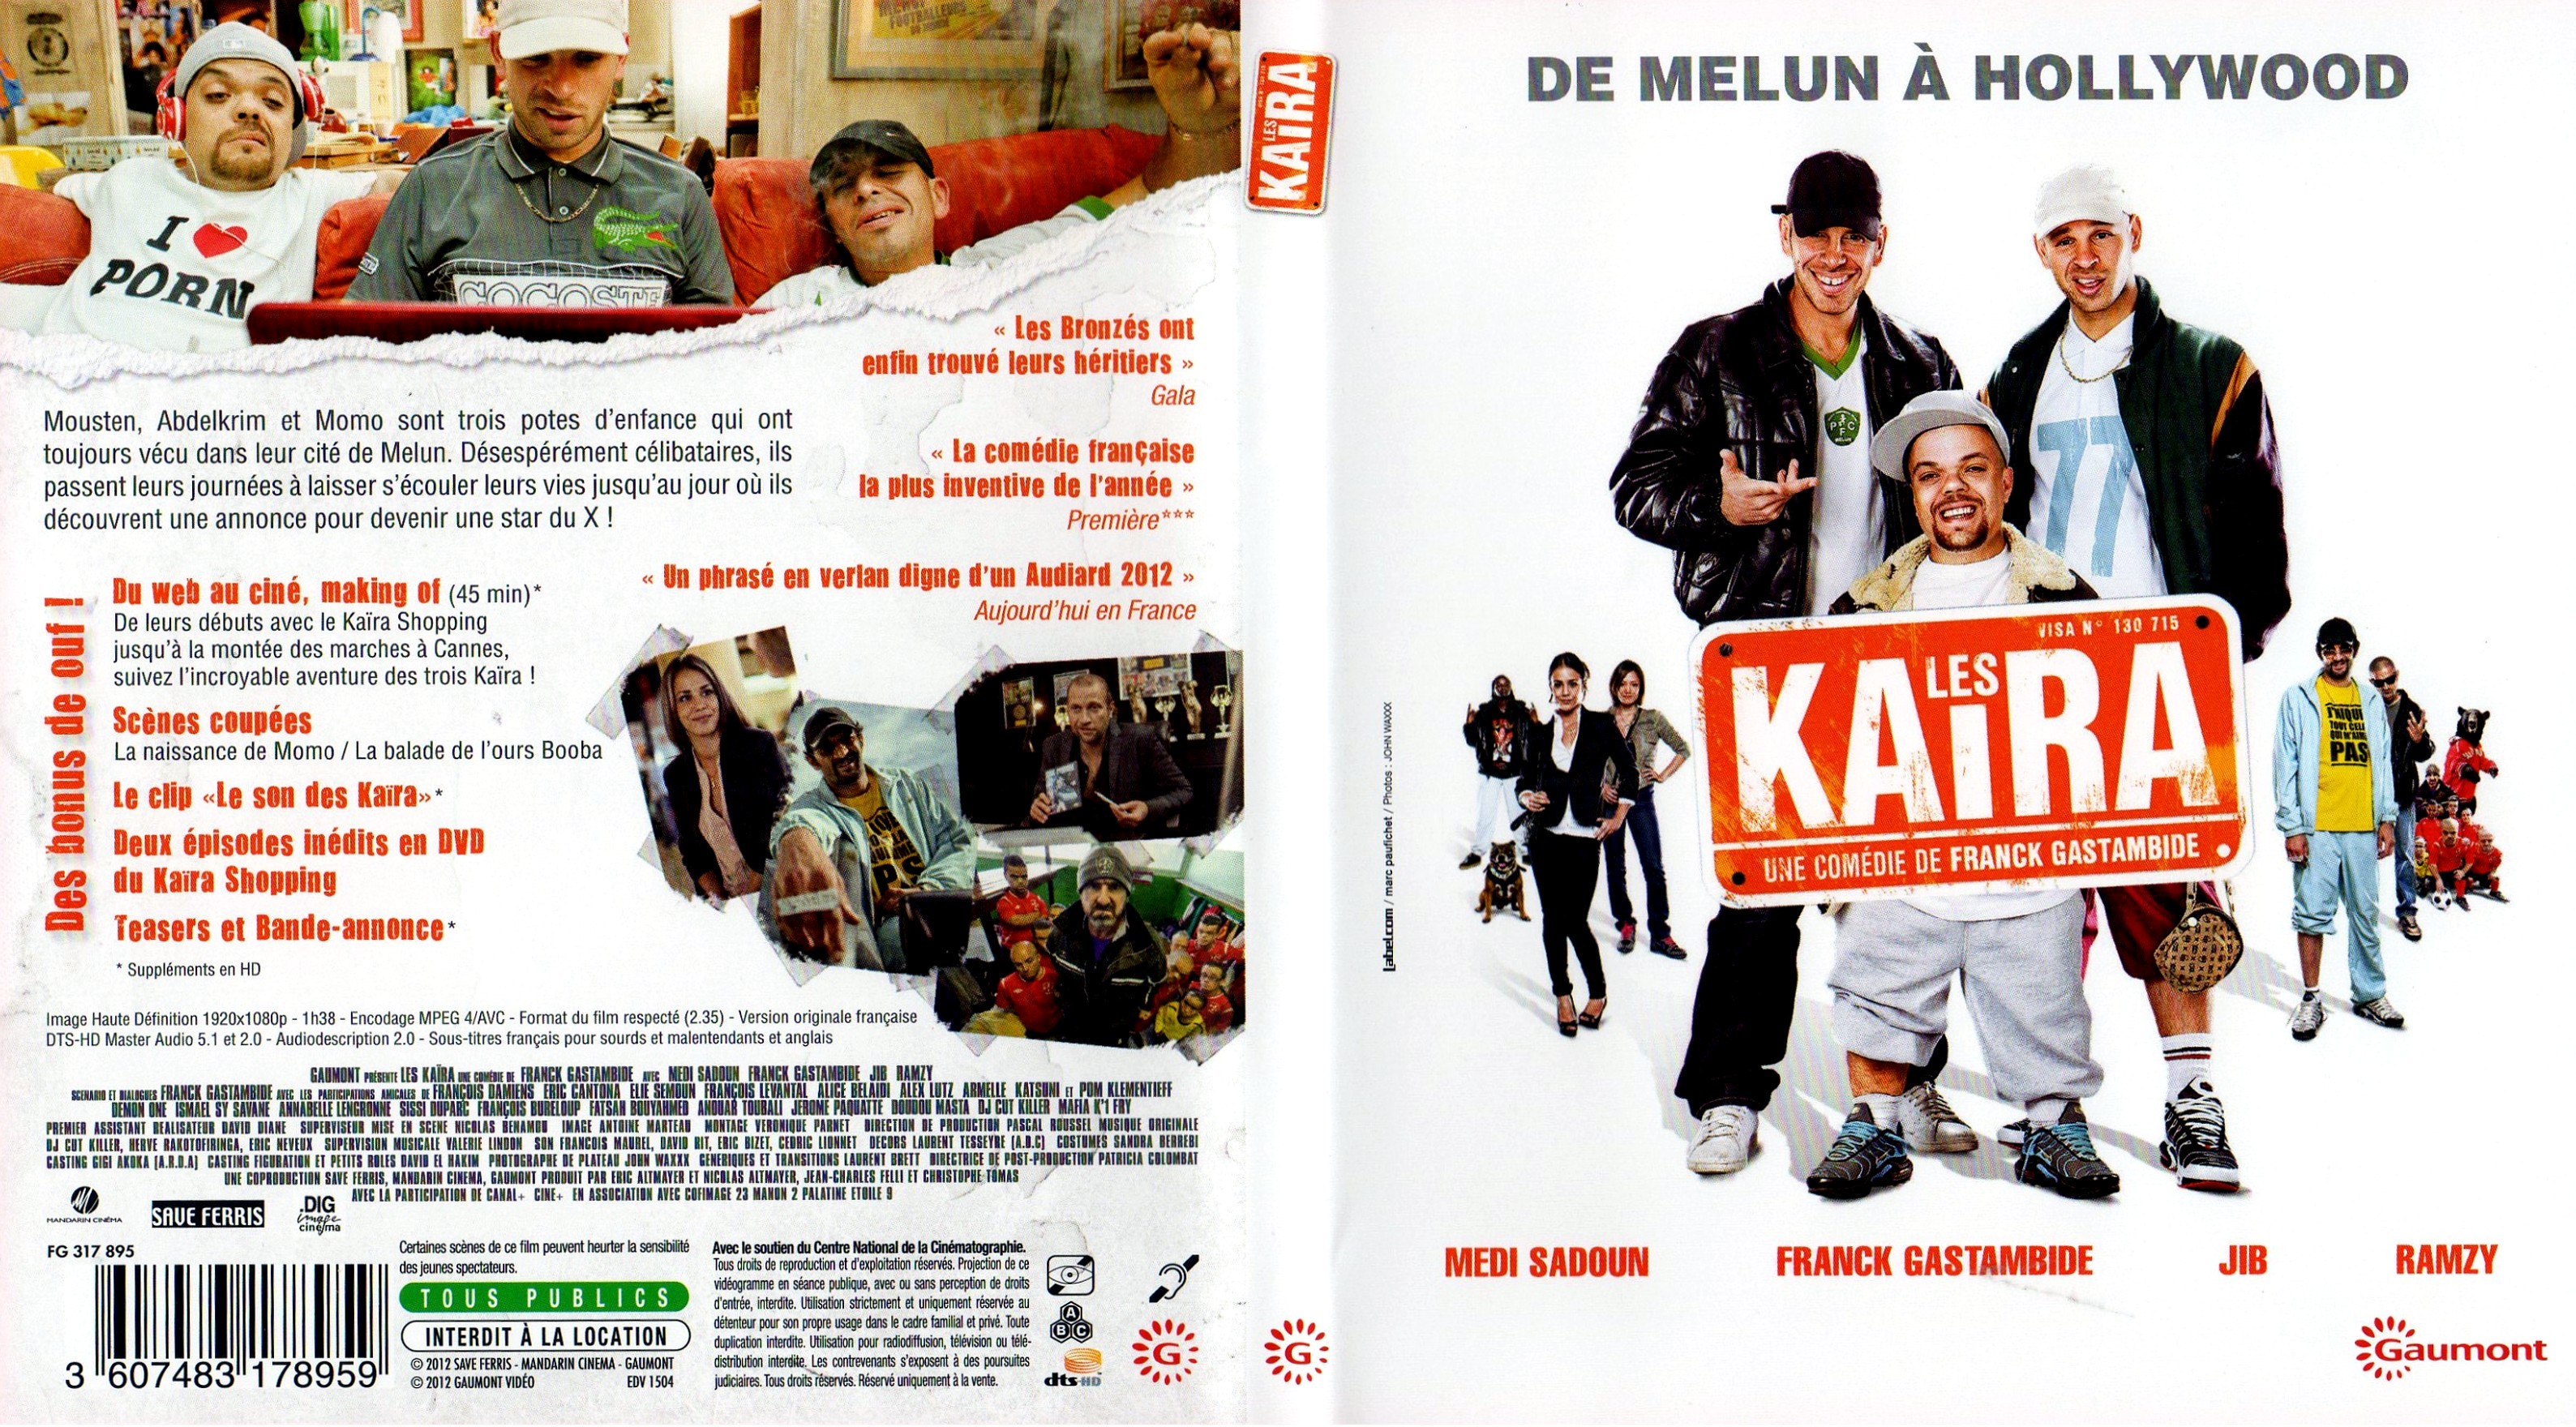 Jaquette DVD Les kaira (BLU-RAY)